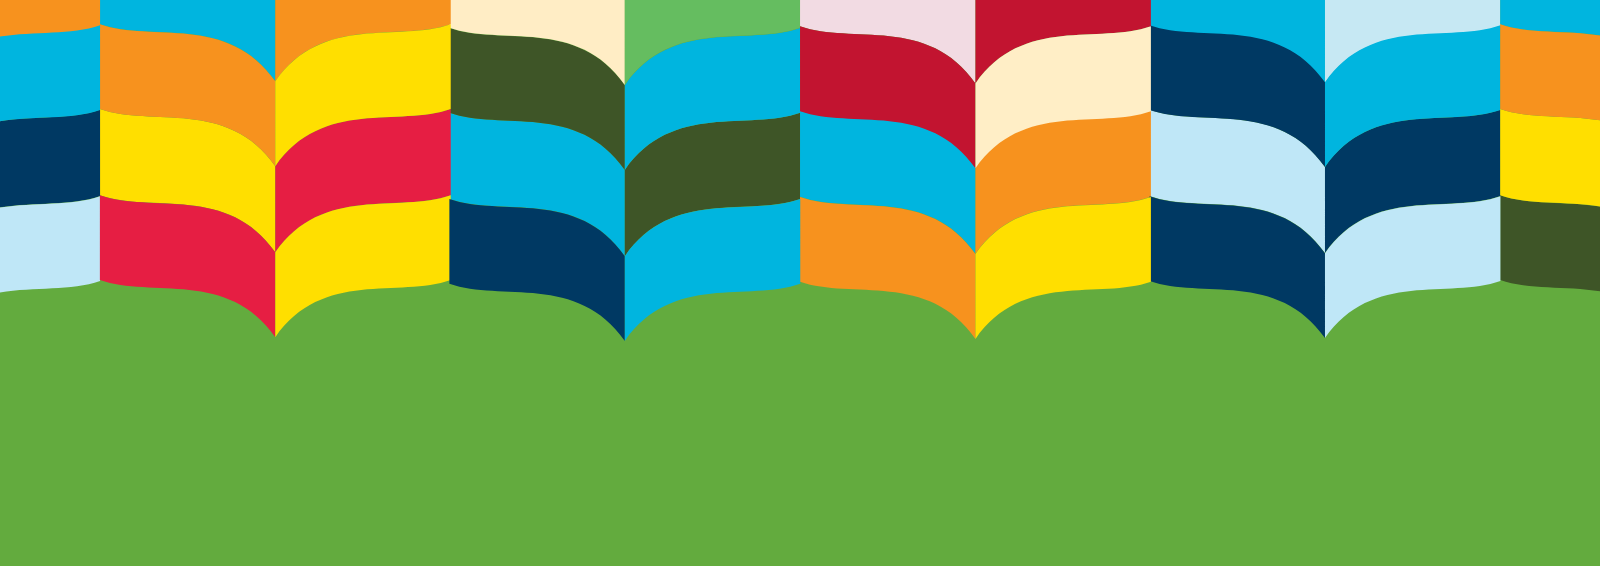 Stylized multicolored LFC logos